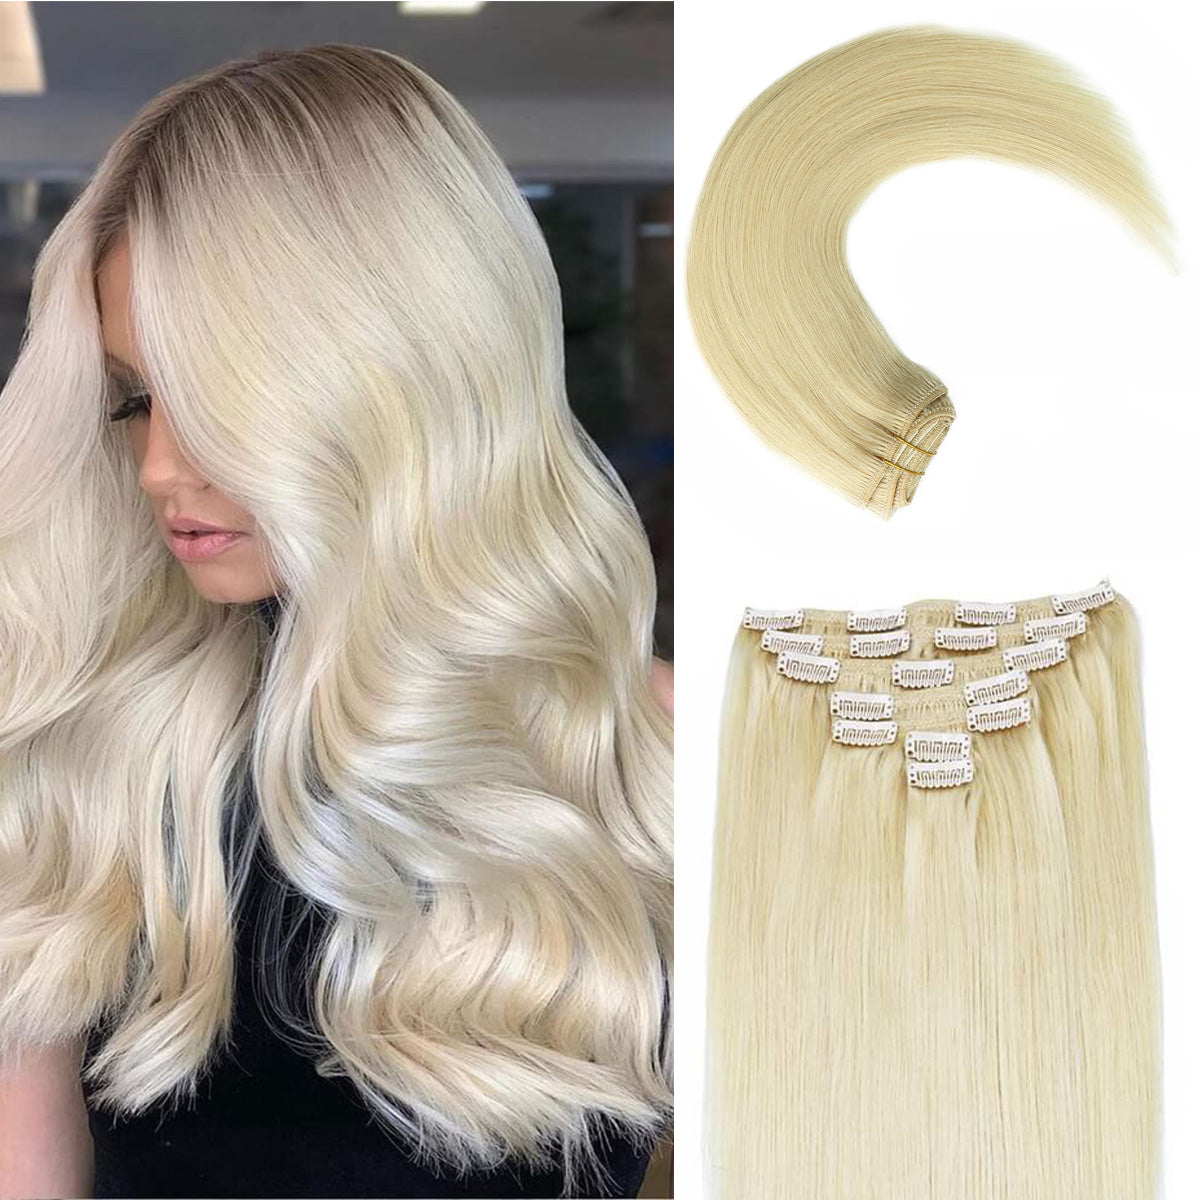 Platinum Blonde Clip In Hair Extensions 120g set